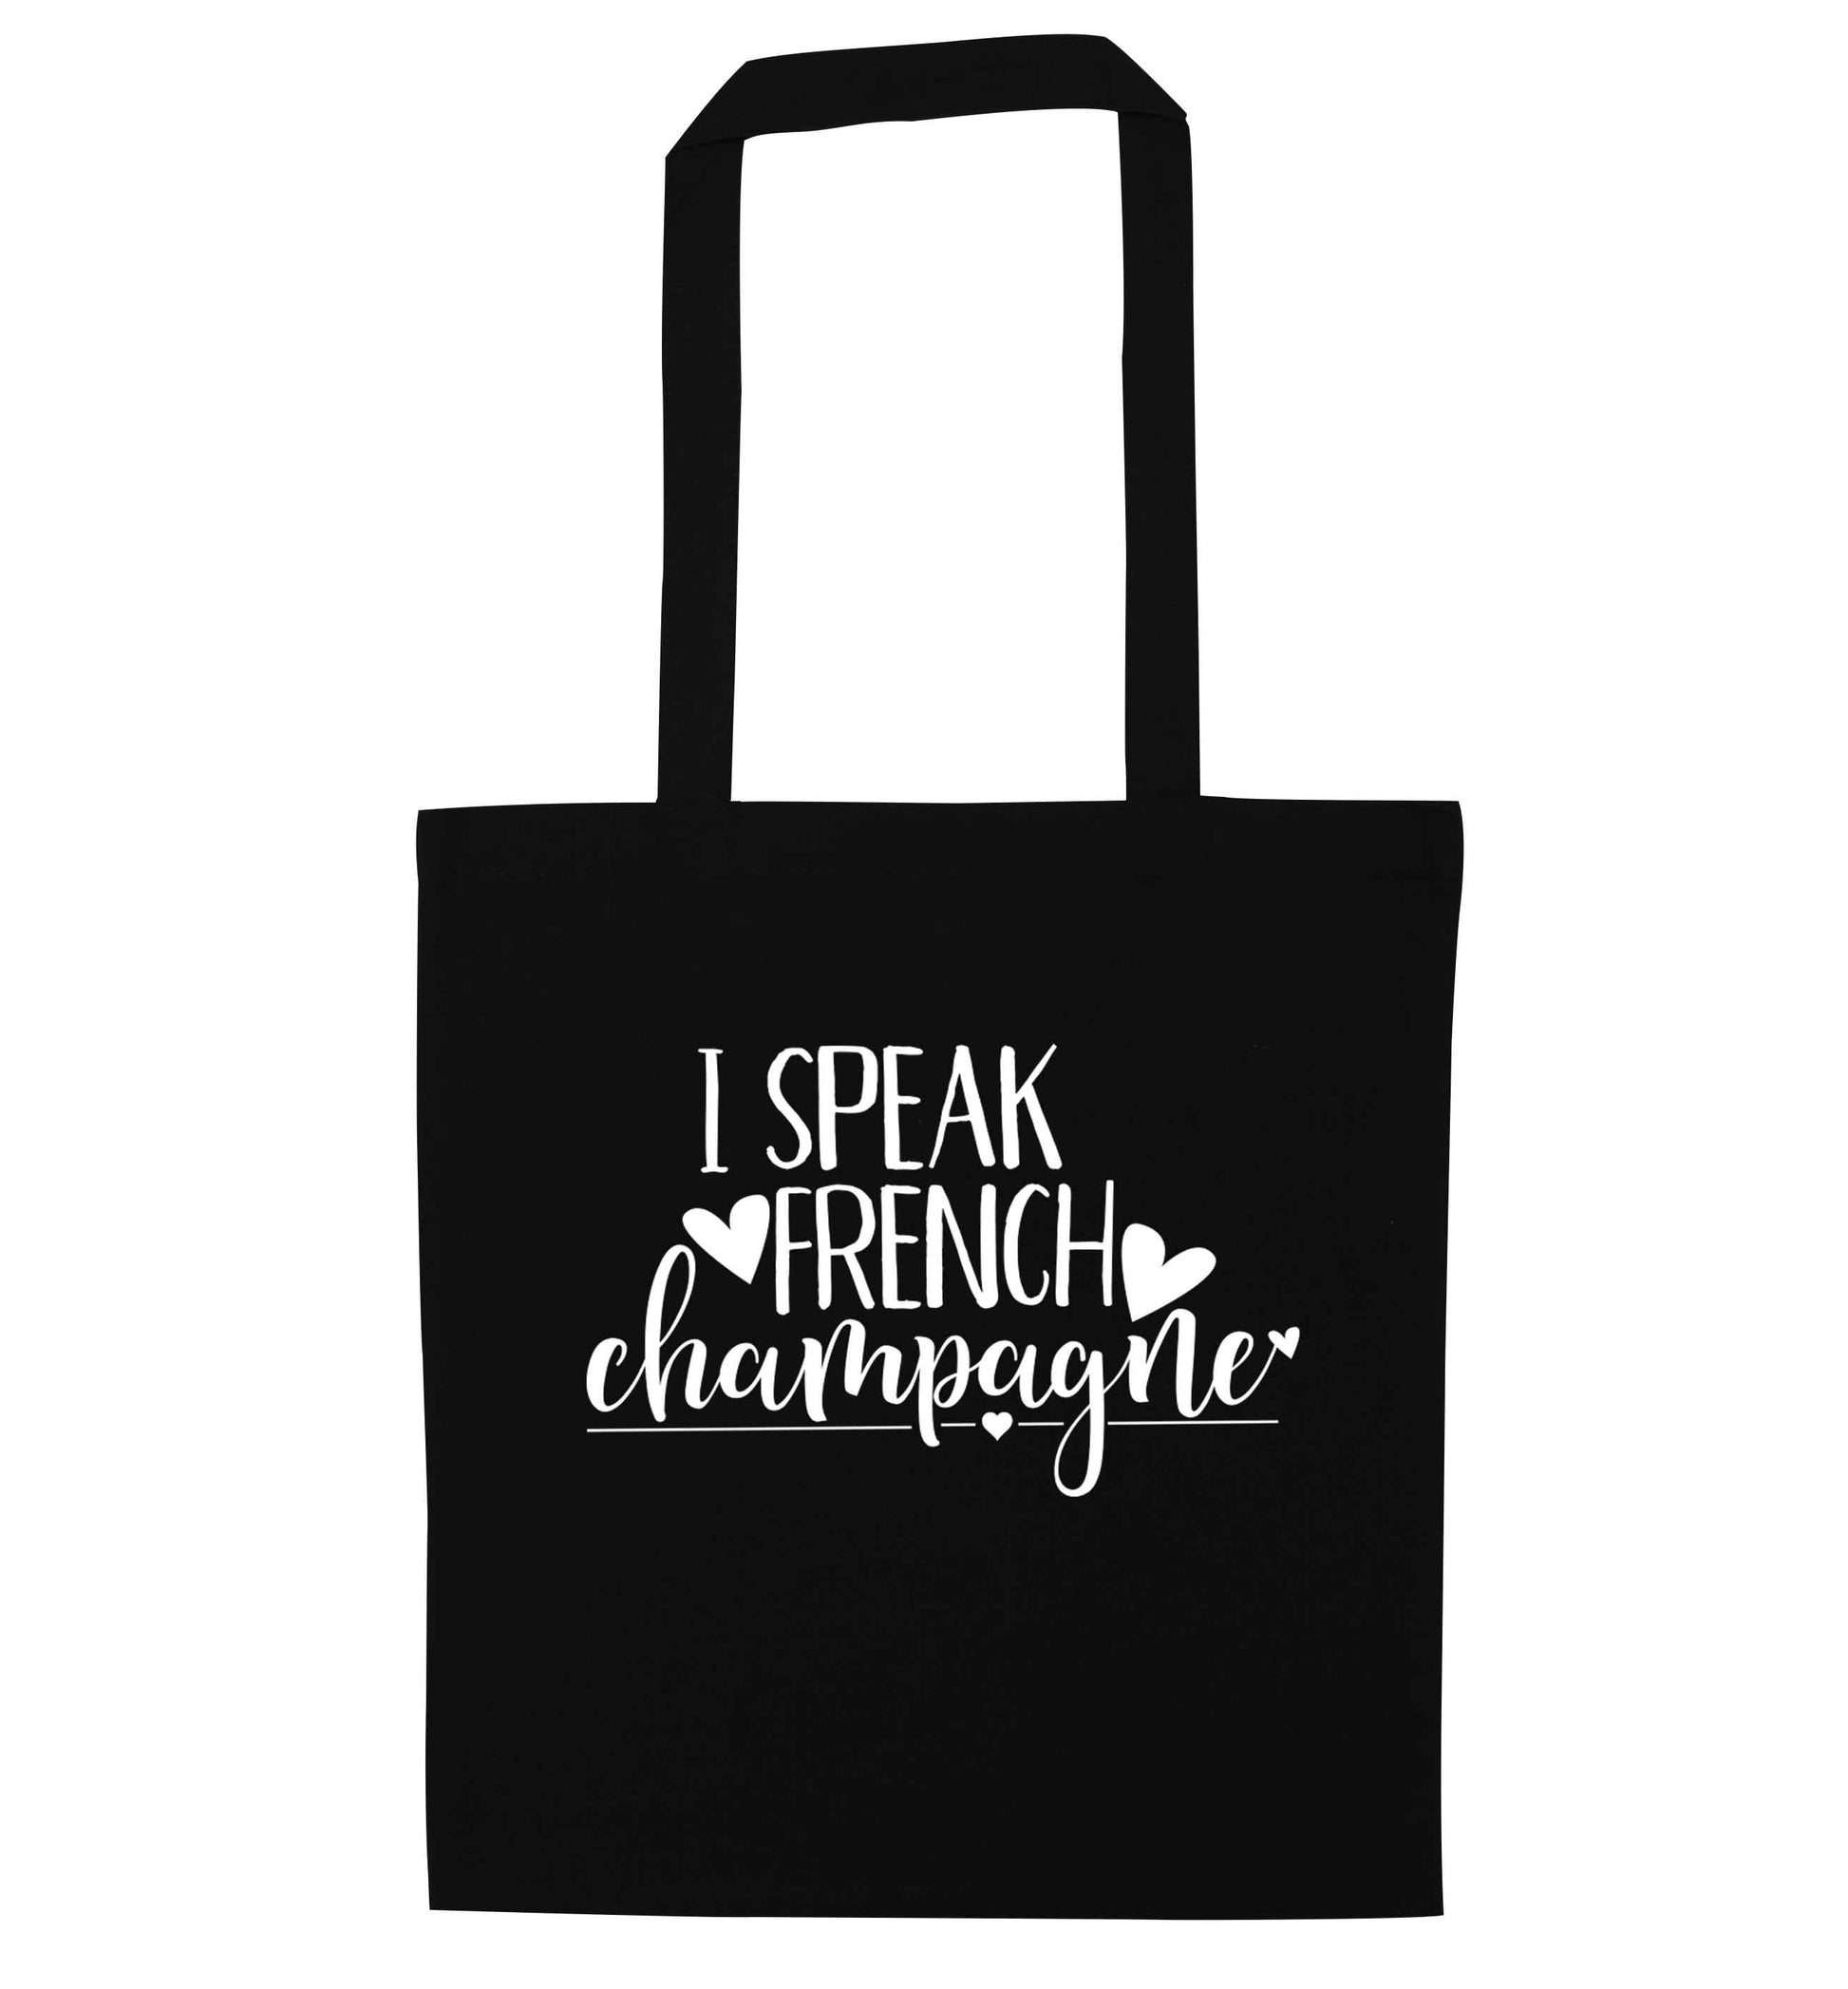 I speak french champagne black tote bag